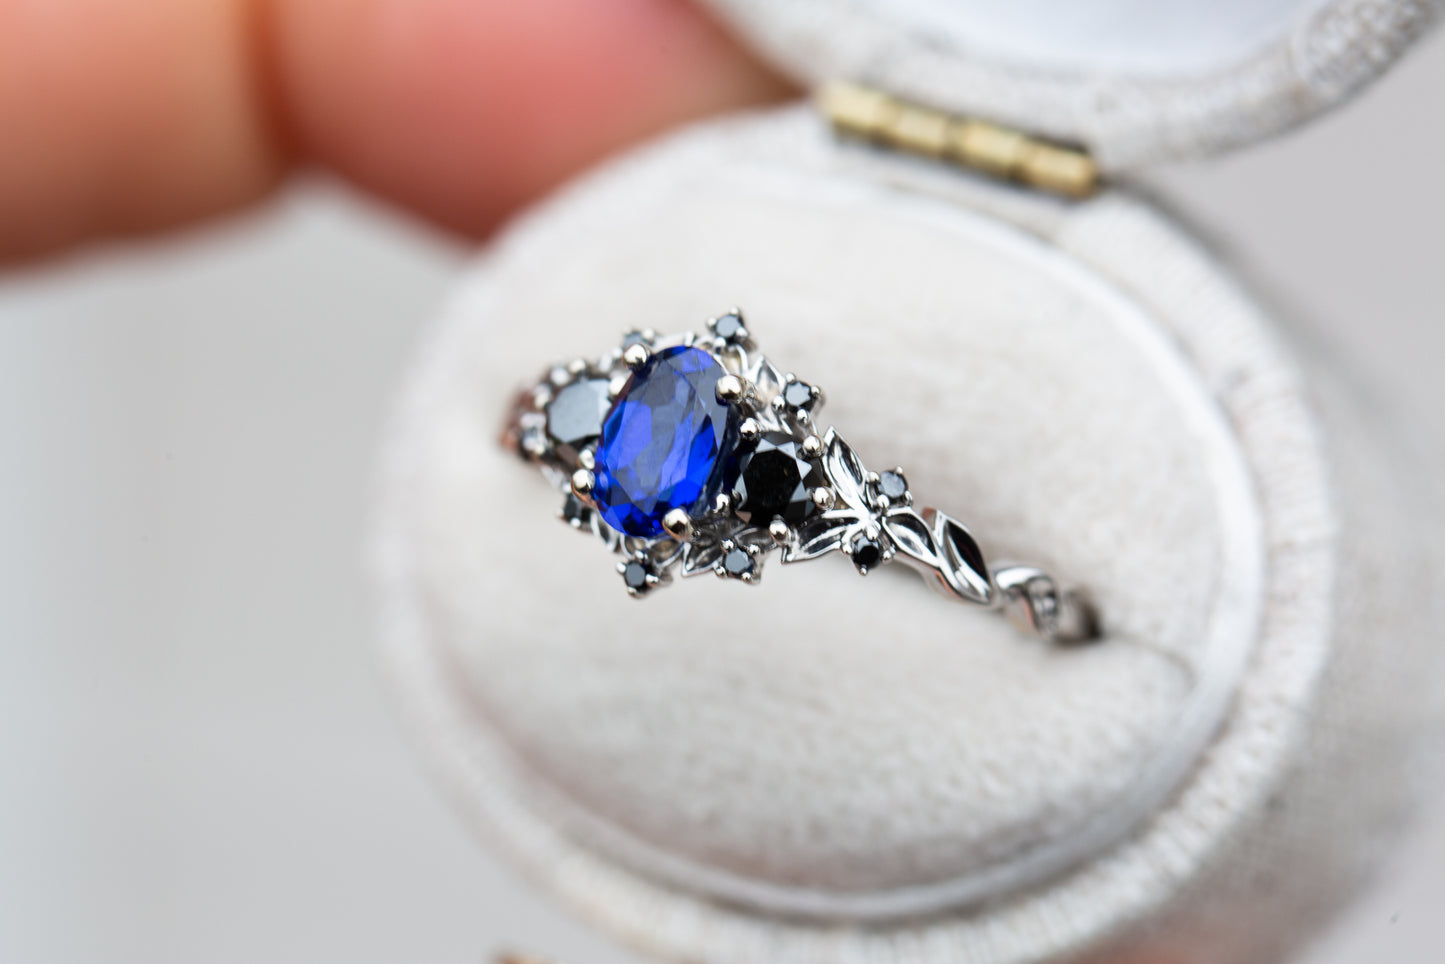 Briar rose three stone with blue sapphire and black diamonds